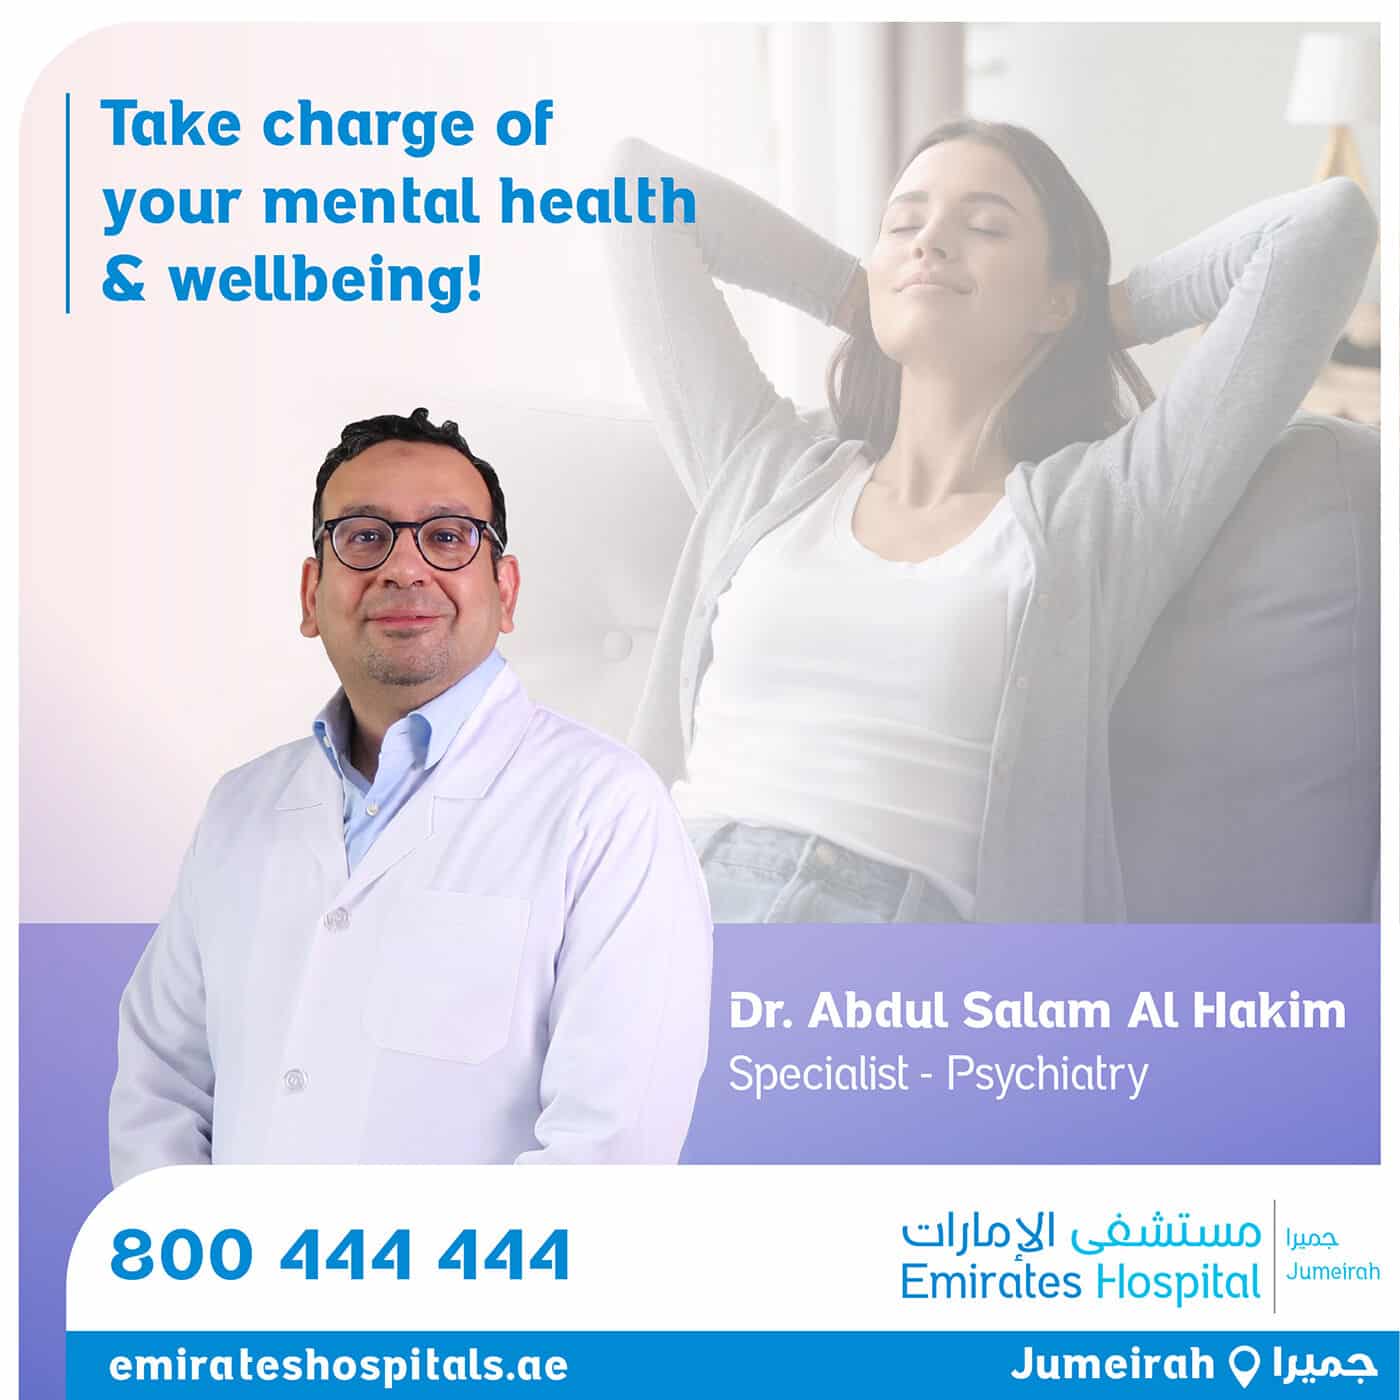 Dr. Abdul Salam Al Hakim, Specialist – Psychiatry Joined Emirates Hospital, Jumeirah